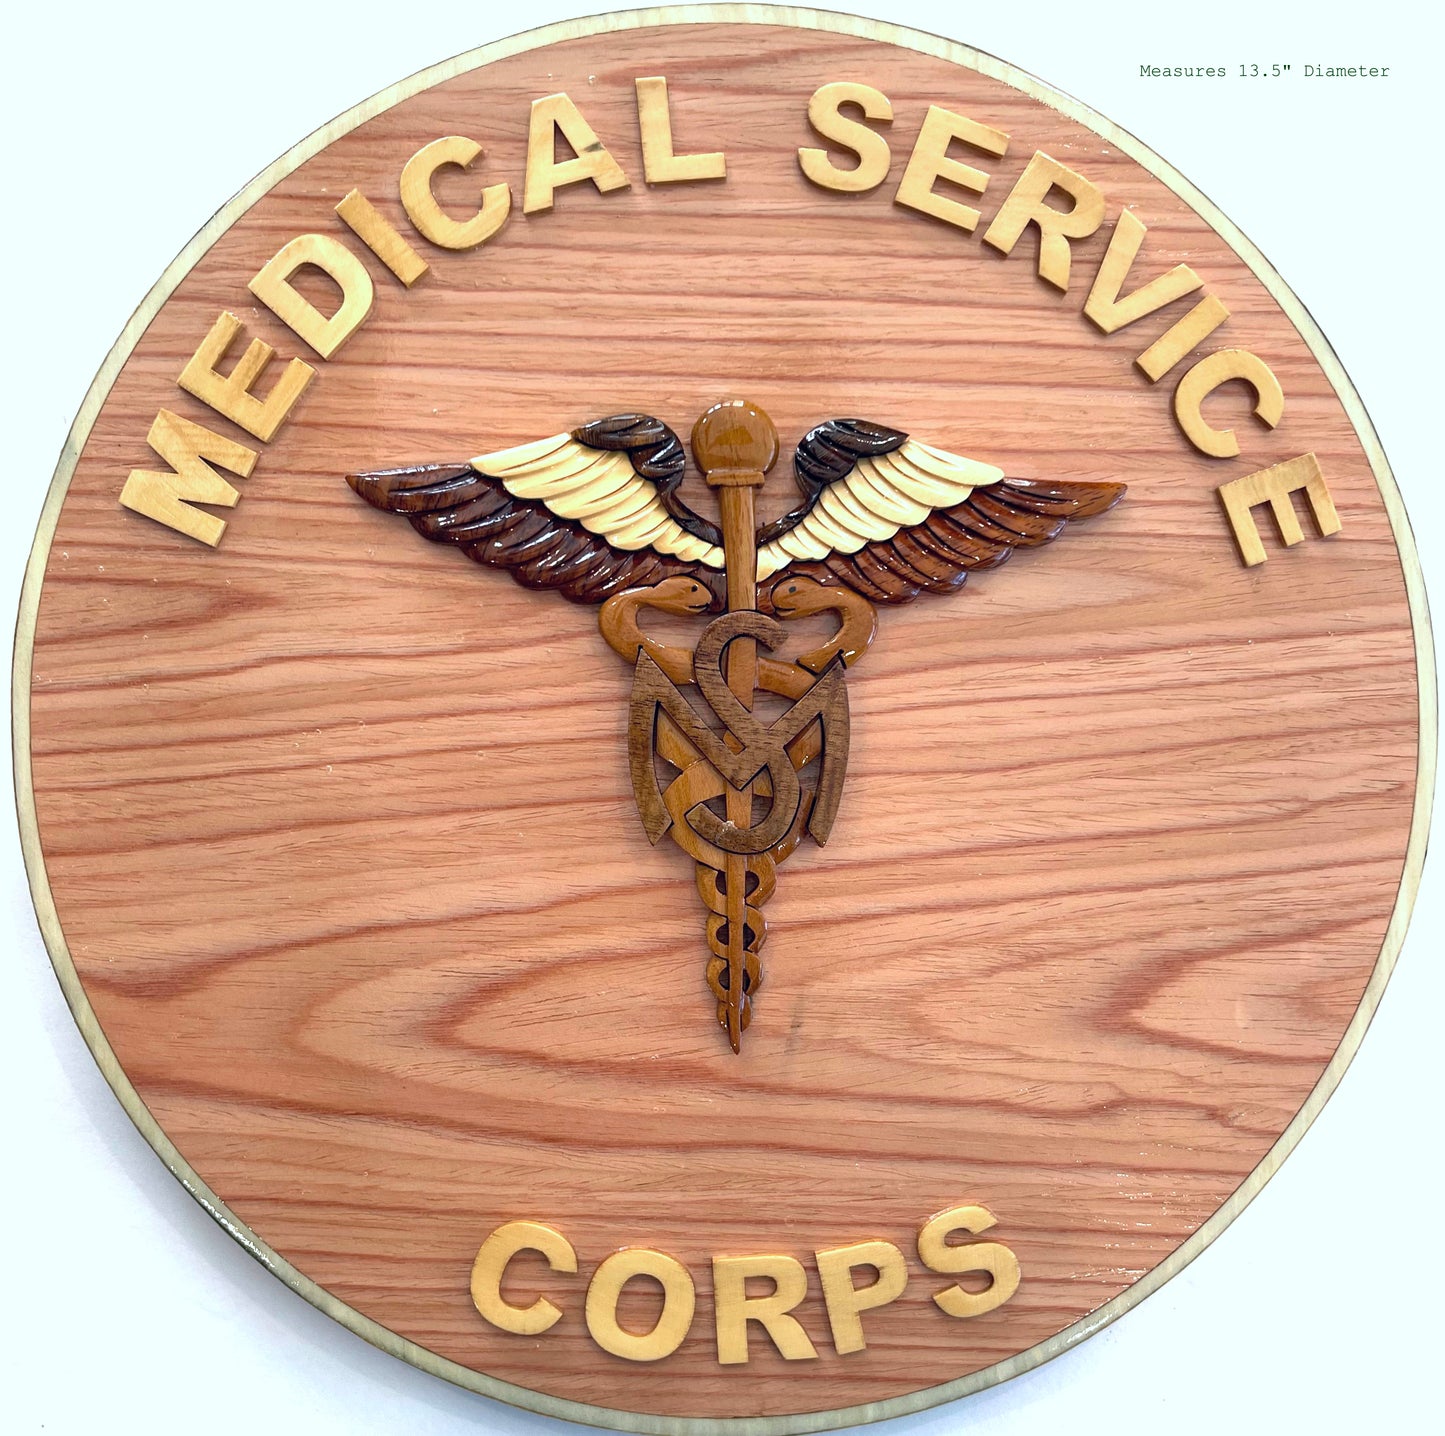 MEDICAL SERVICES CORPS EMBLEM - MSC